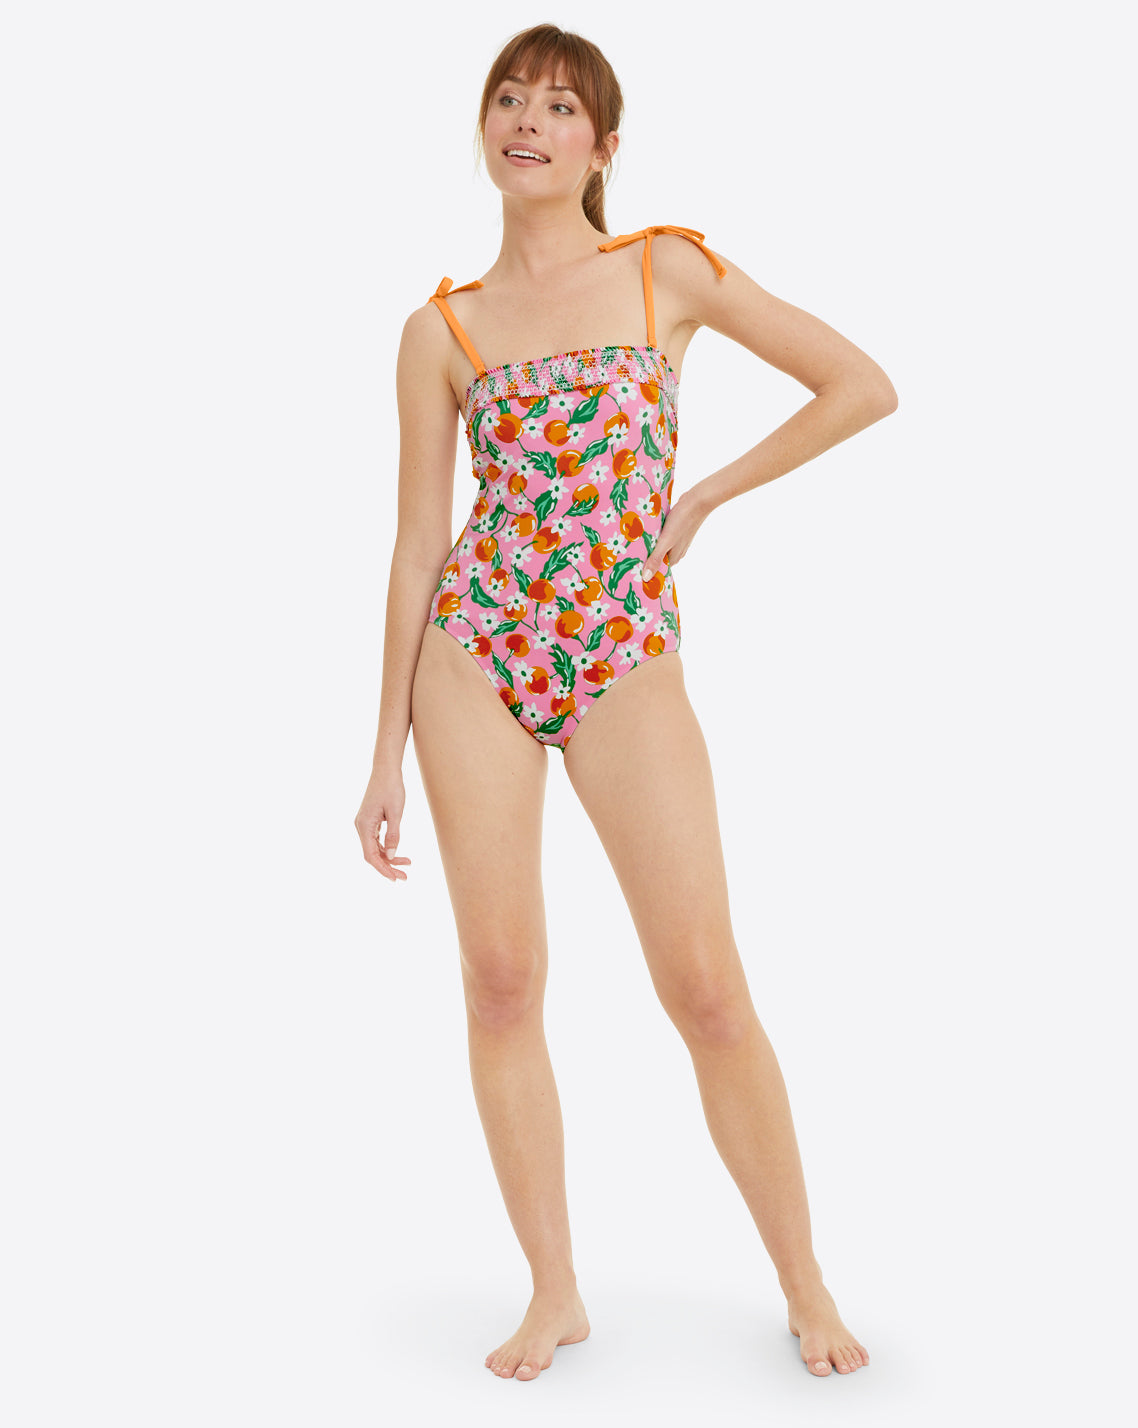 Floral Swim Bottoms - Women's Full Coverage Swimwear